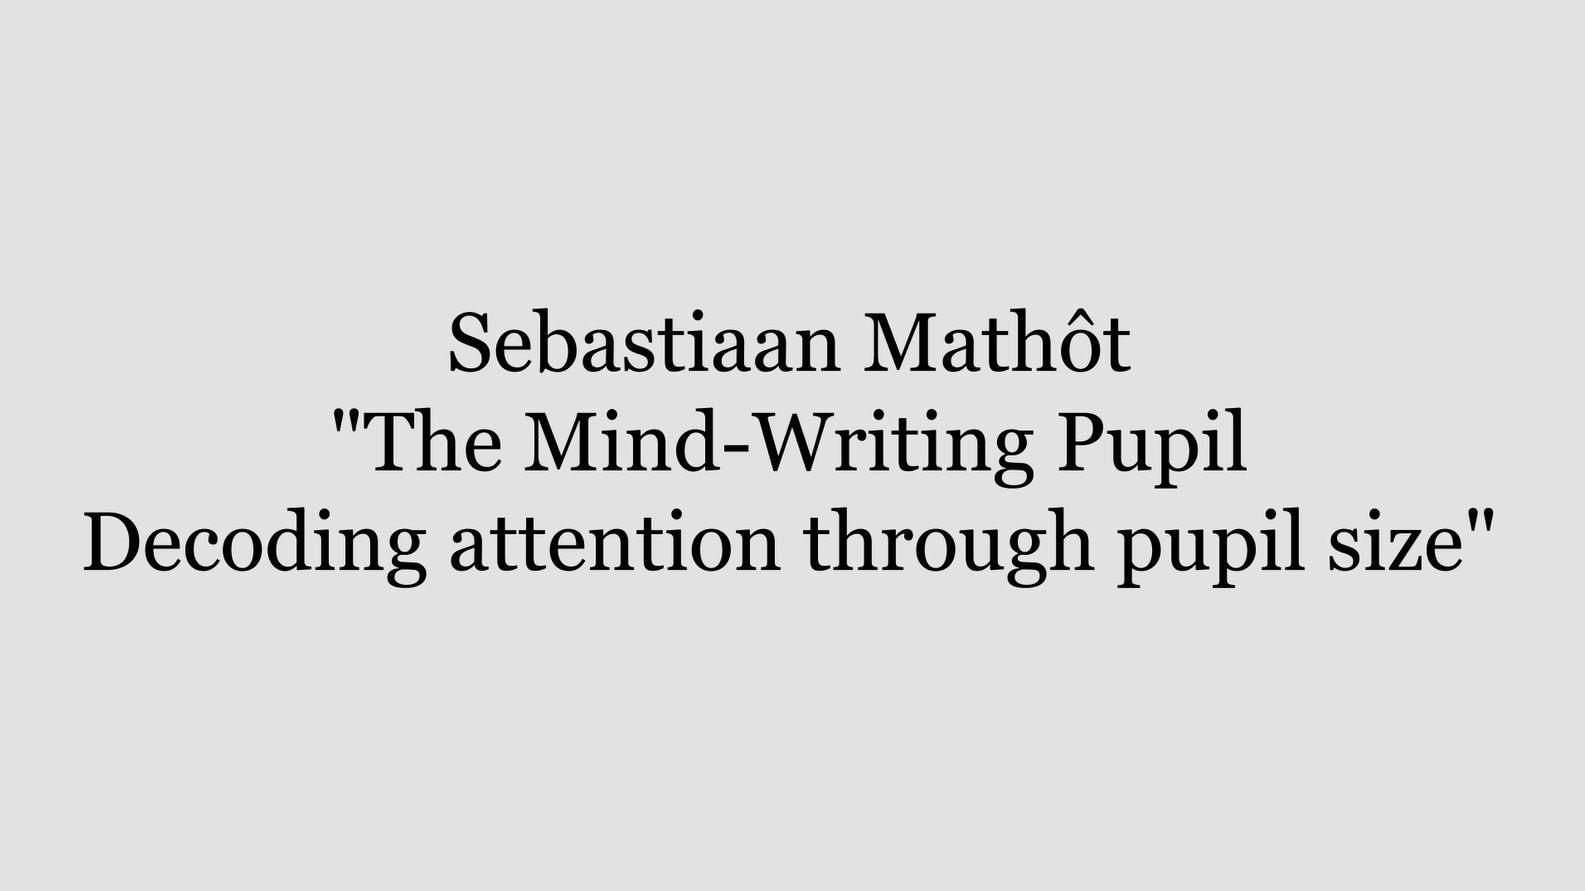 The Mind-Writing Pupil by Sebastiaan Mathôt